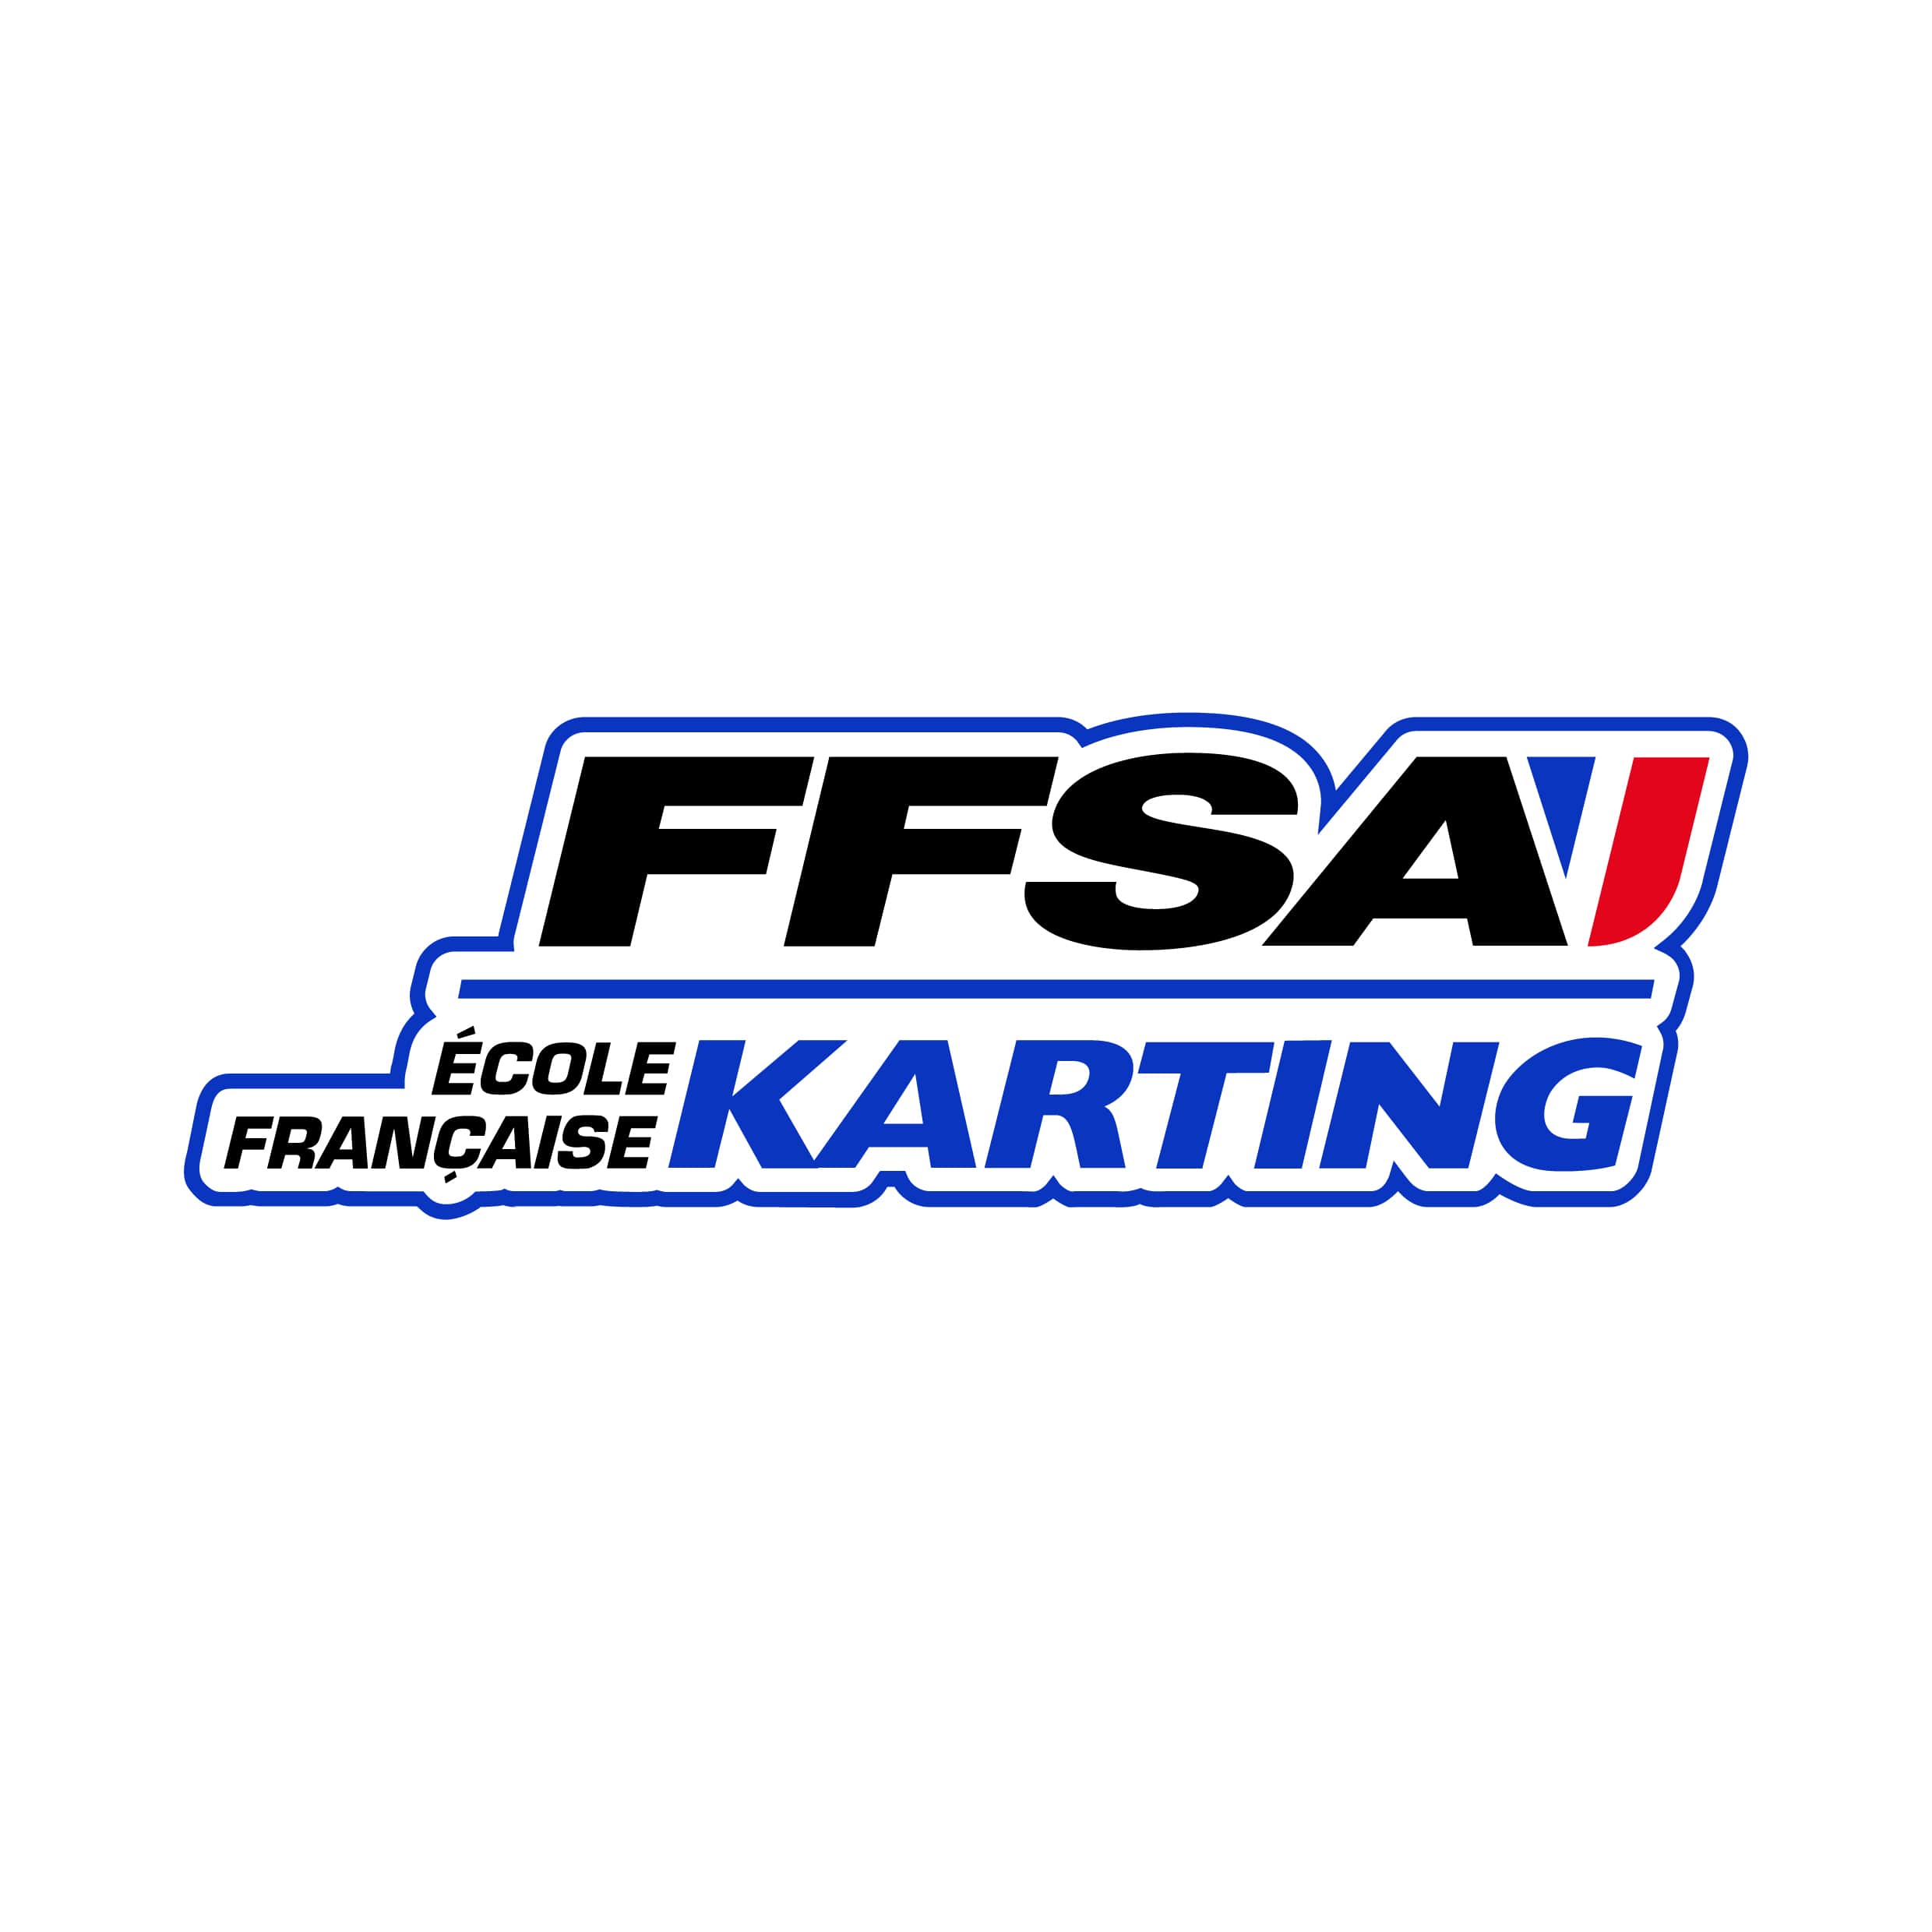 stickers-ffsa-ecole-francaise-karting-ref21-sport-automobile-autocollant-voiture-sticker-auto-autocollants-decals-racing-min